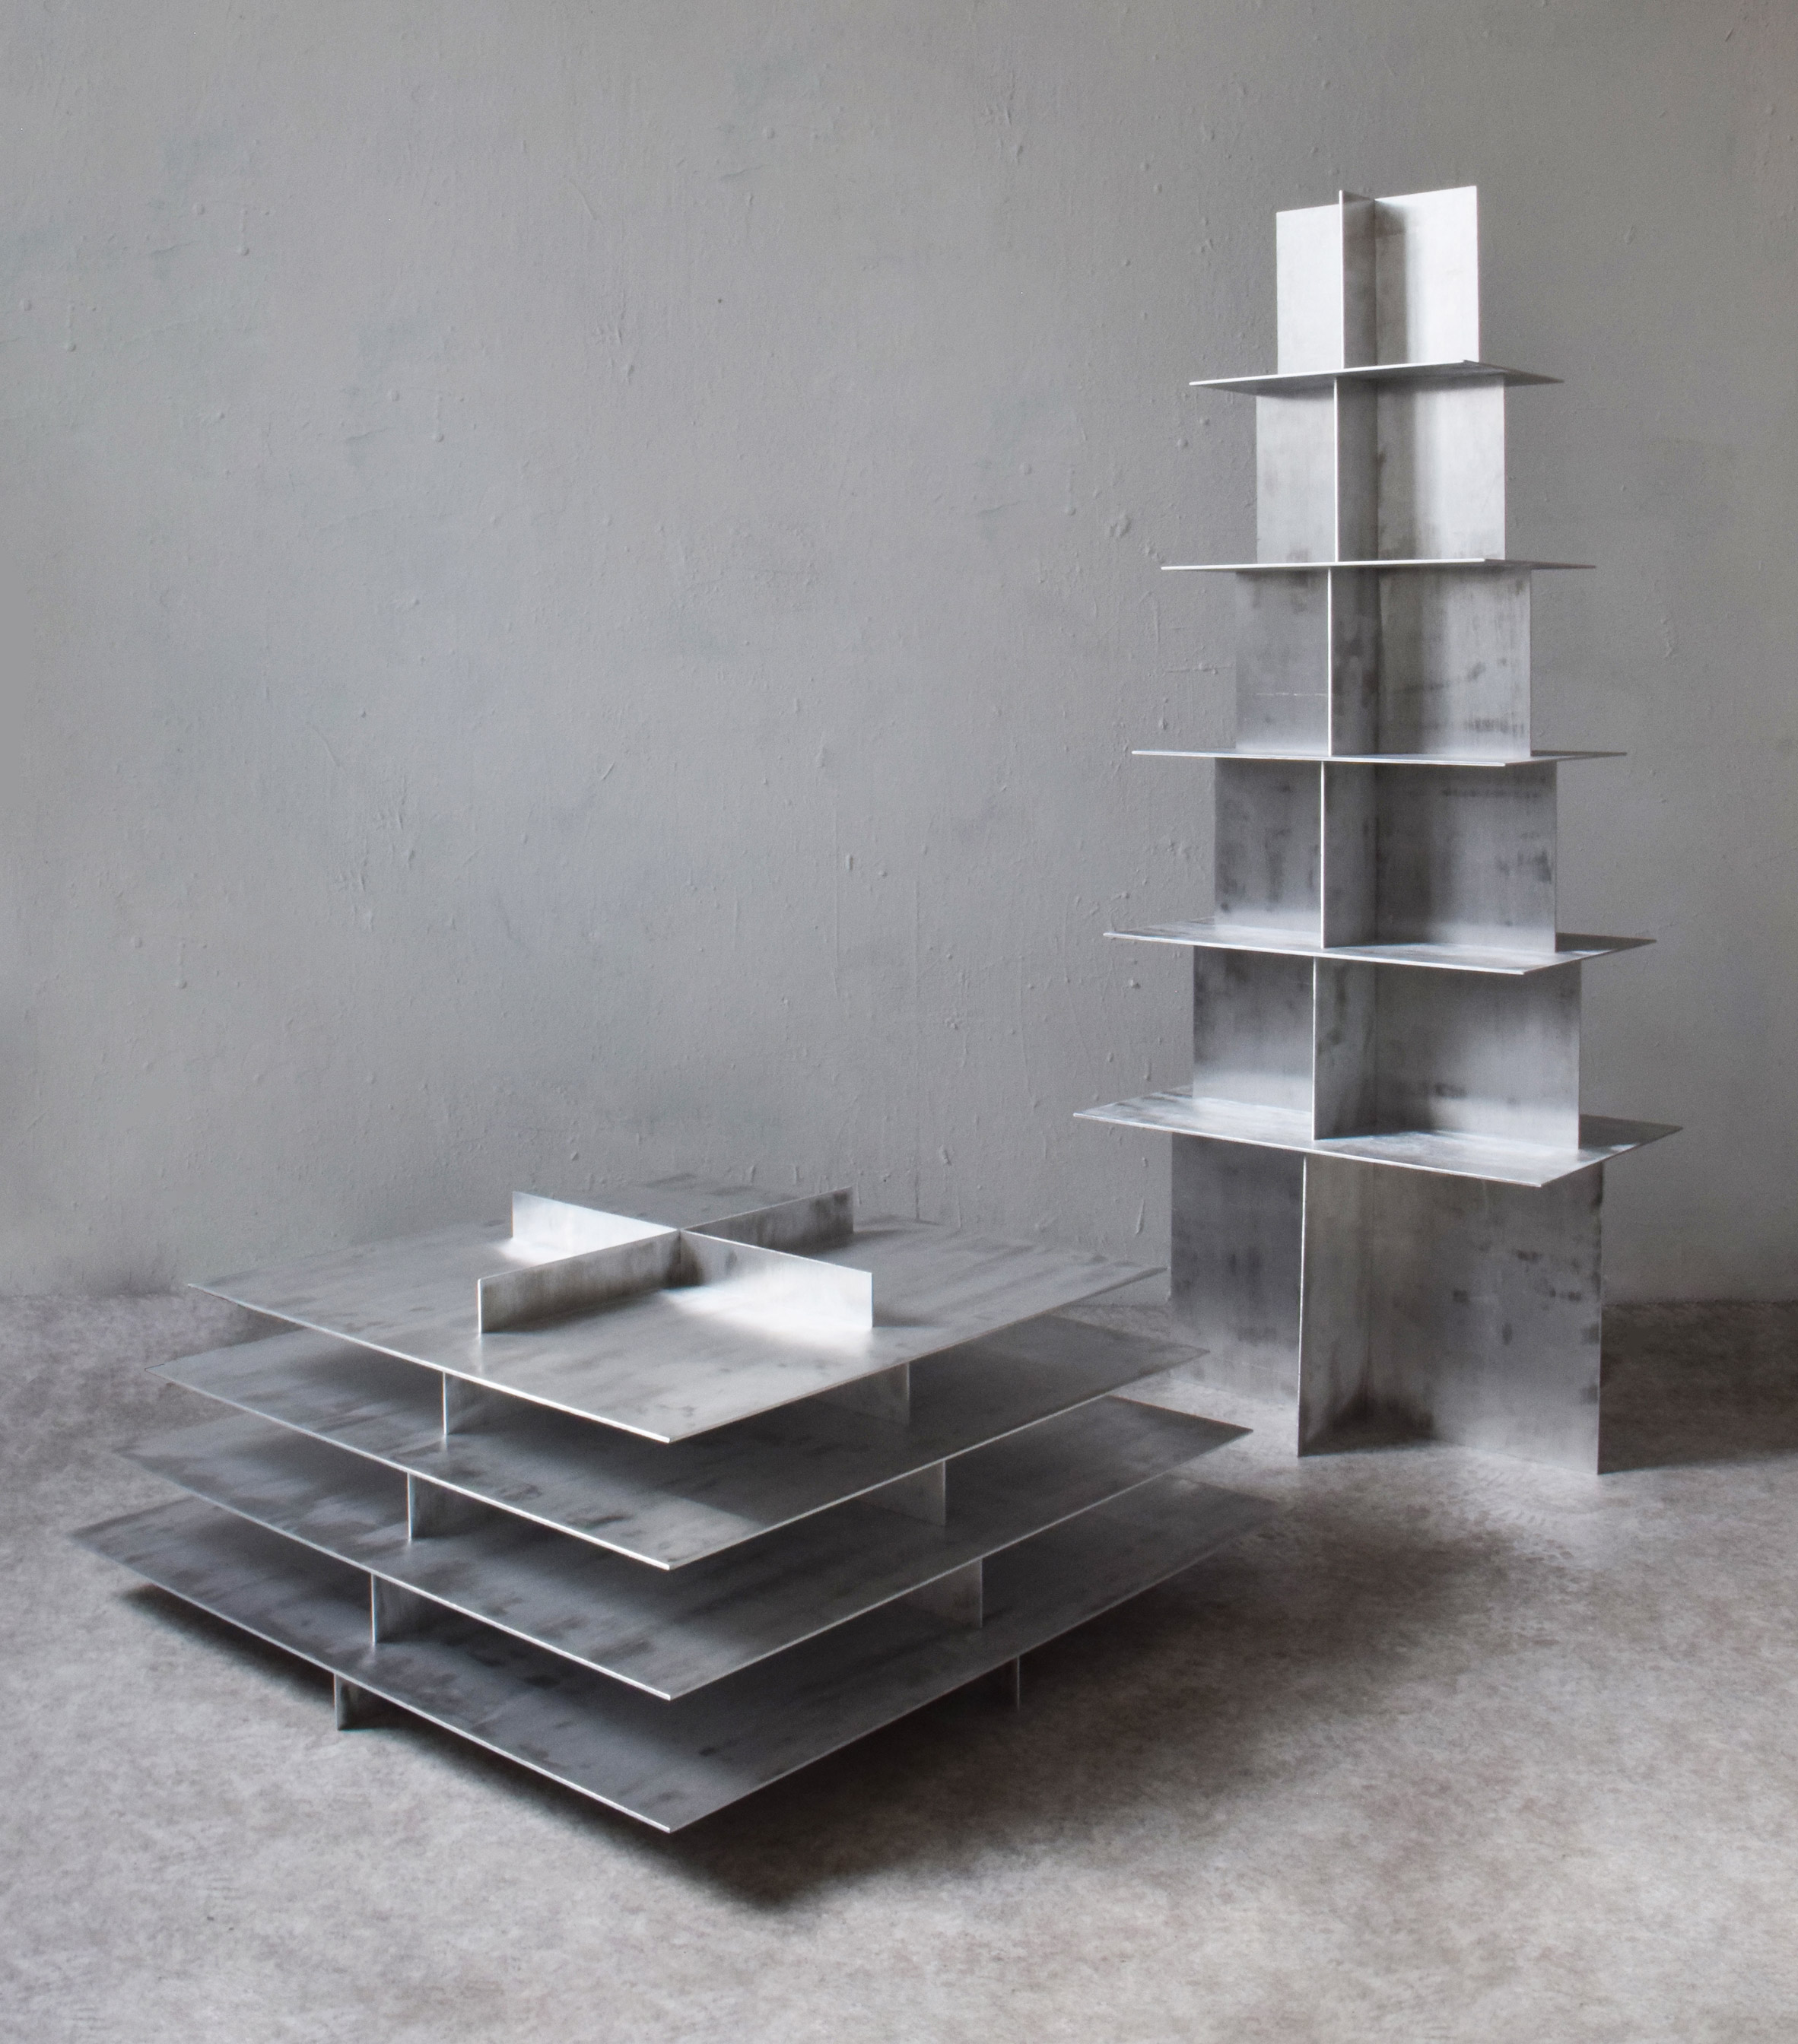 Pyramid aluminium shelves by Bram Vanderbeke and Wendy Andreu